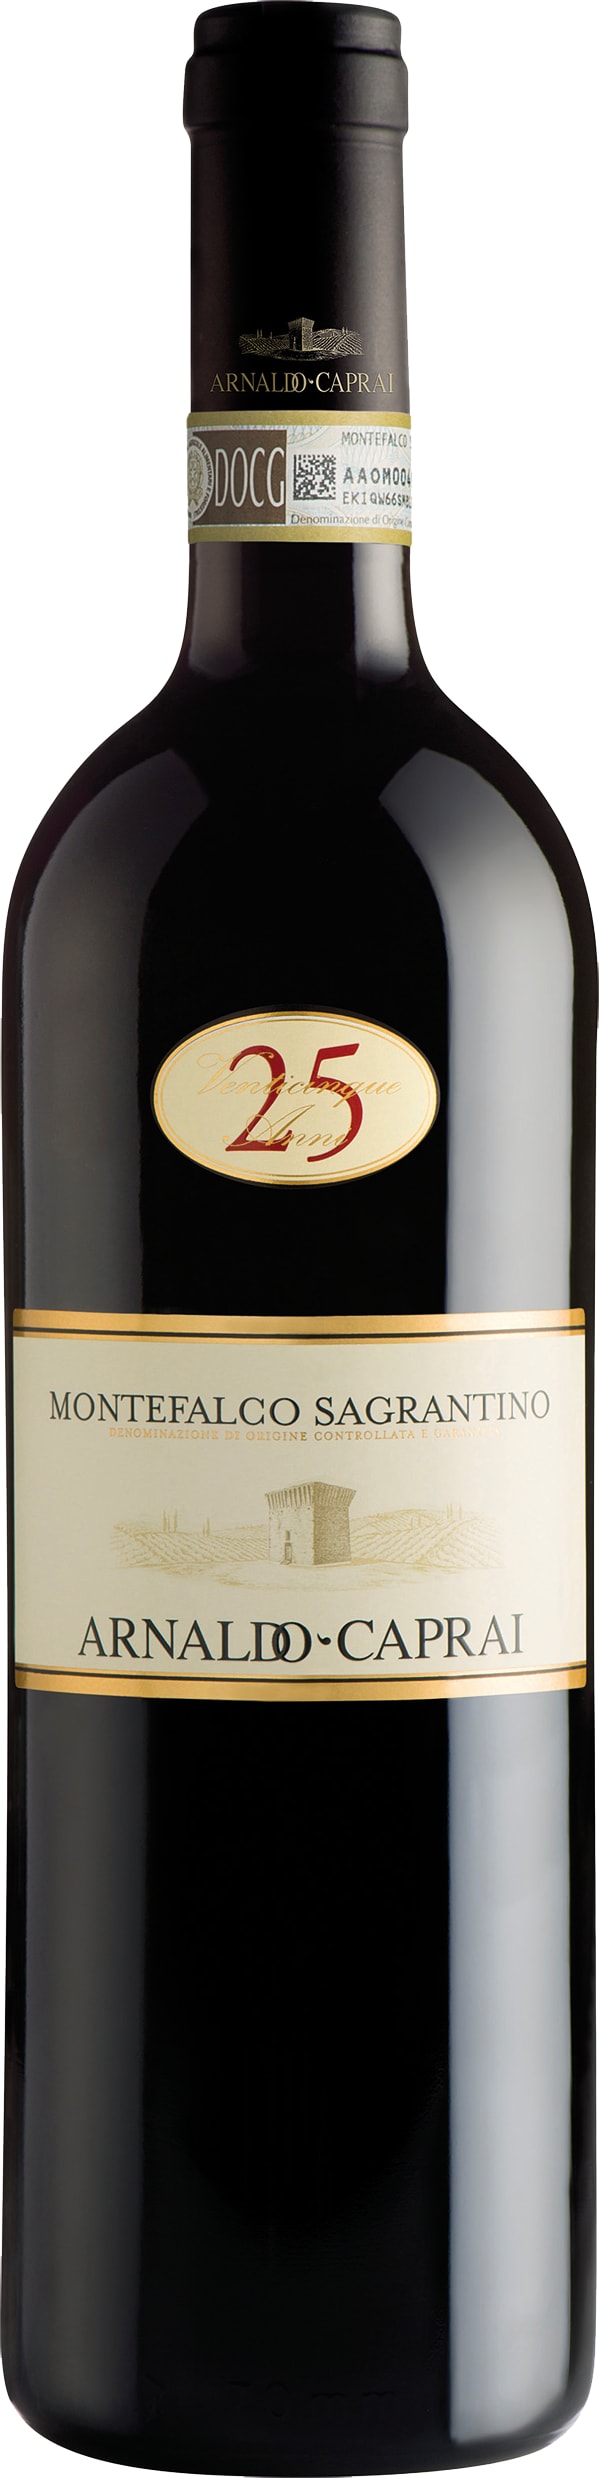 Arnaldo Caprai Sagrantino DOCG 25th Annivesary 2009 75cl - Buy Arnaldo Caprai Wines from GREAT WINES DIRECT wine shop